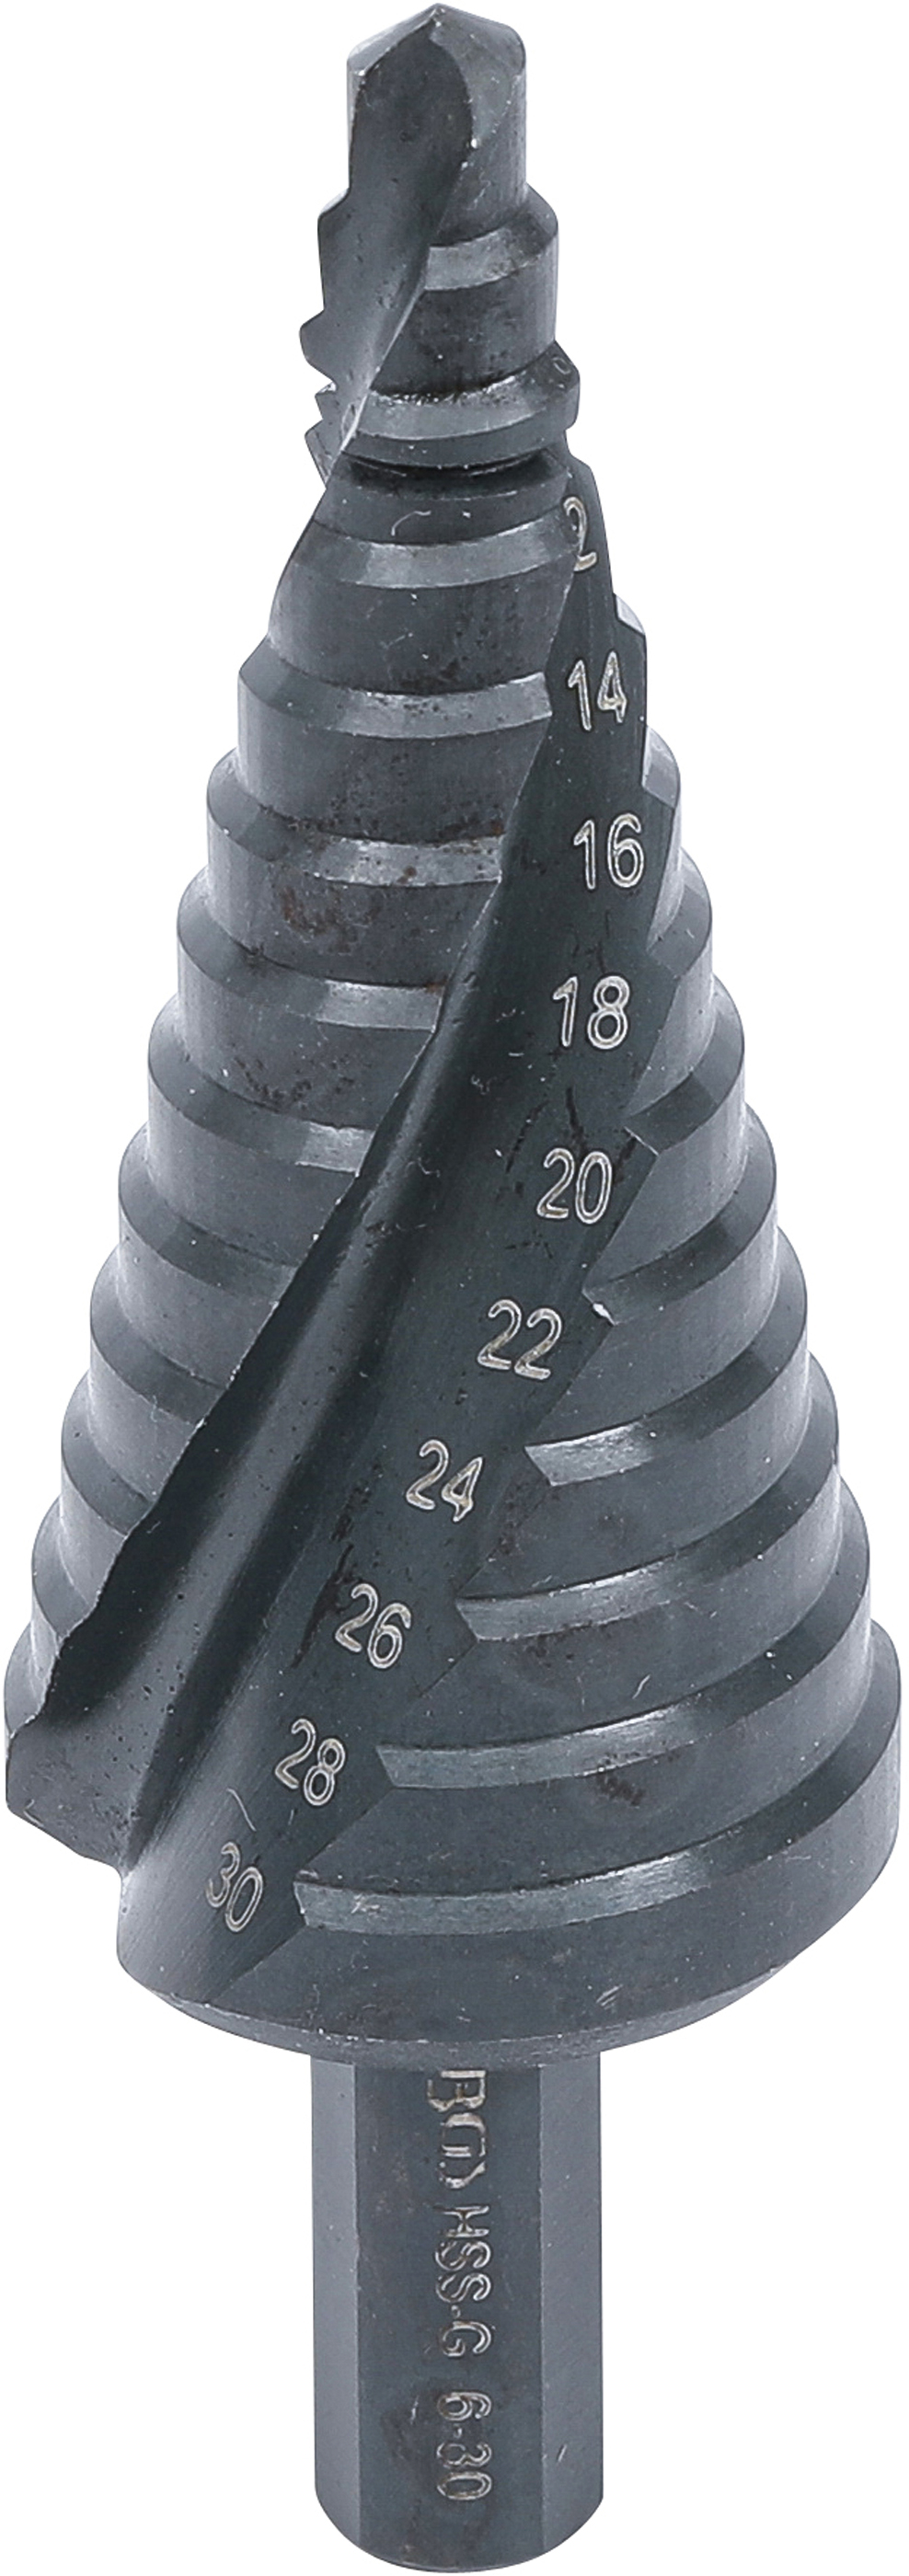 BGS 1945-1 Freza de majorat, 6-30 mm